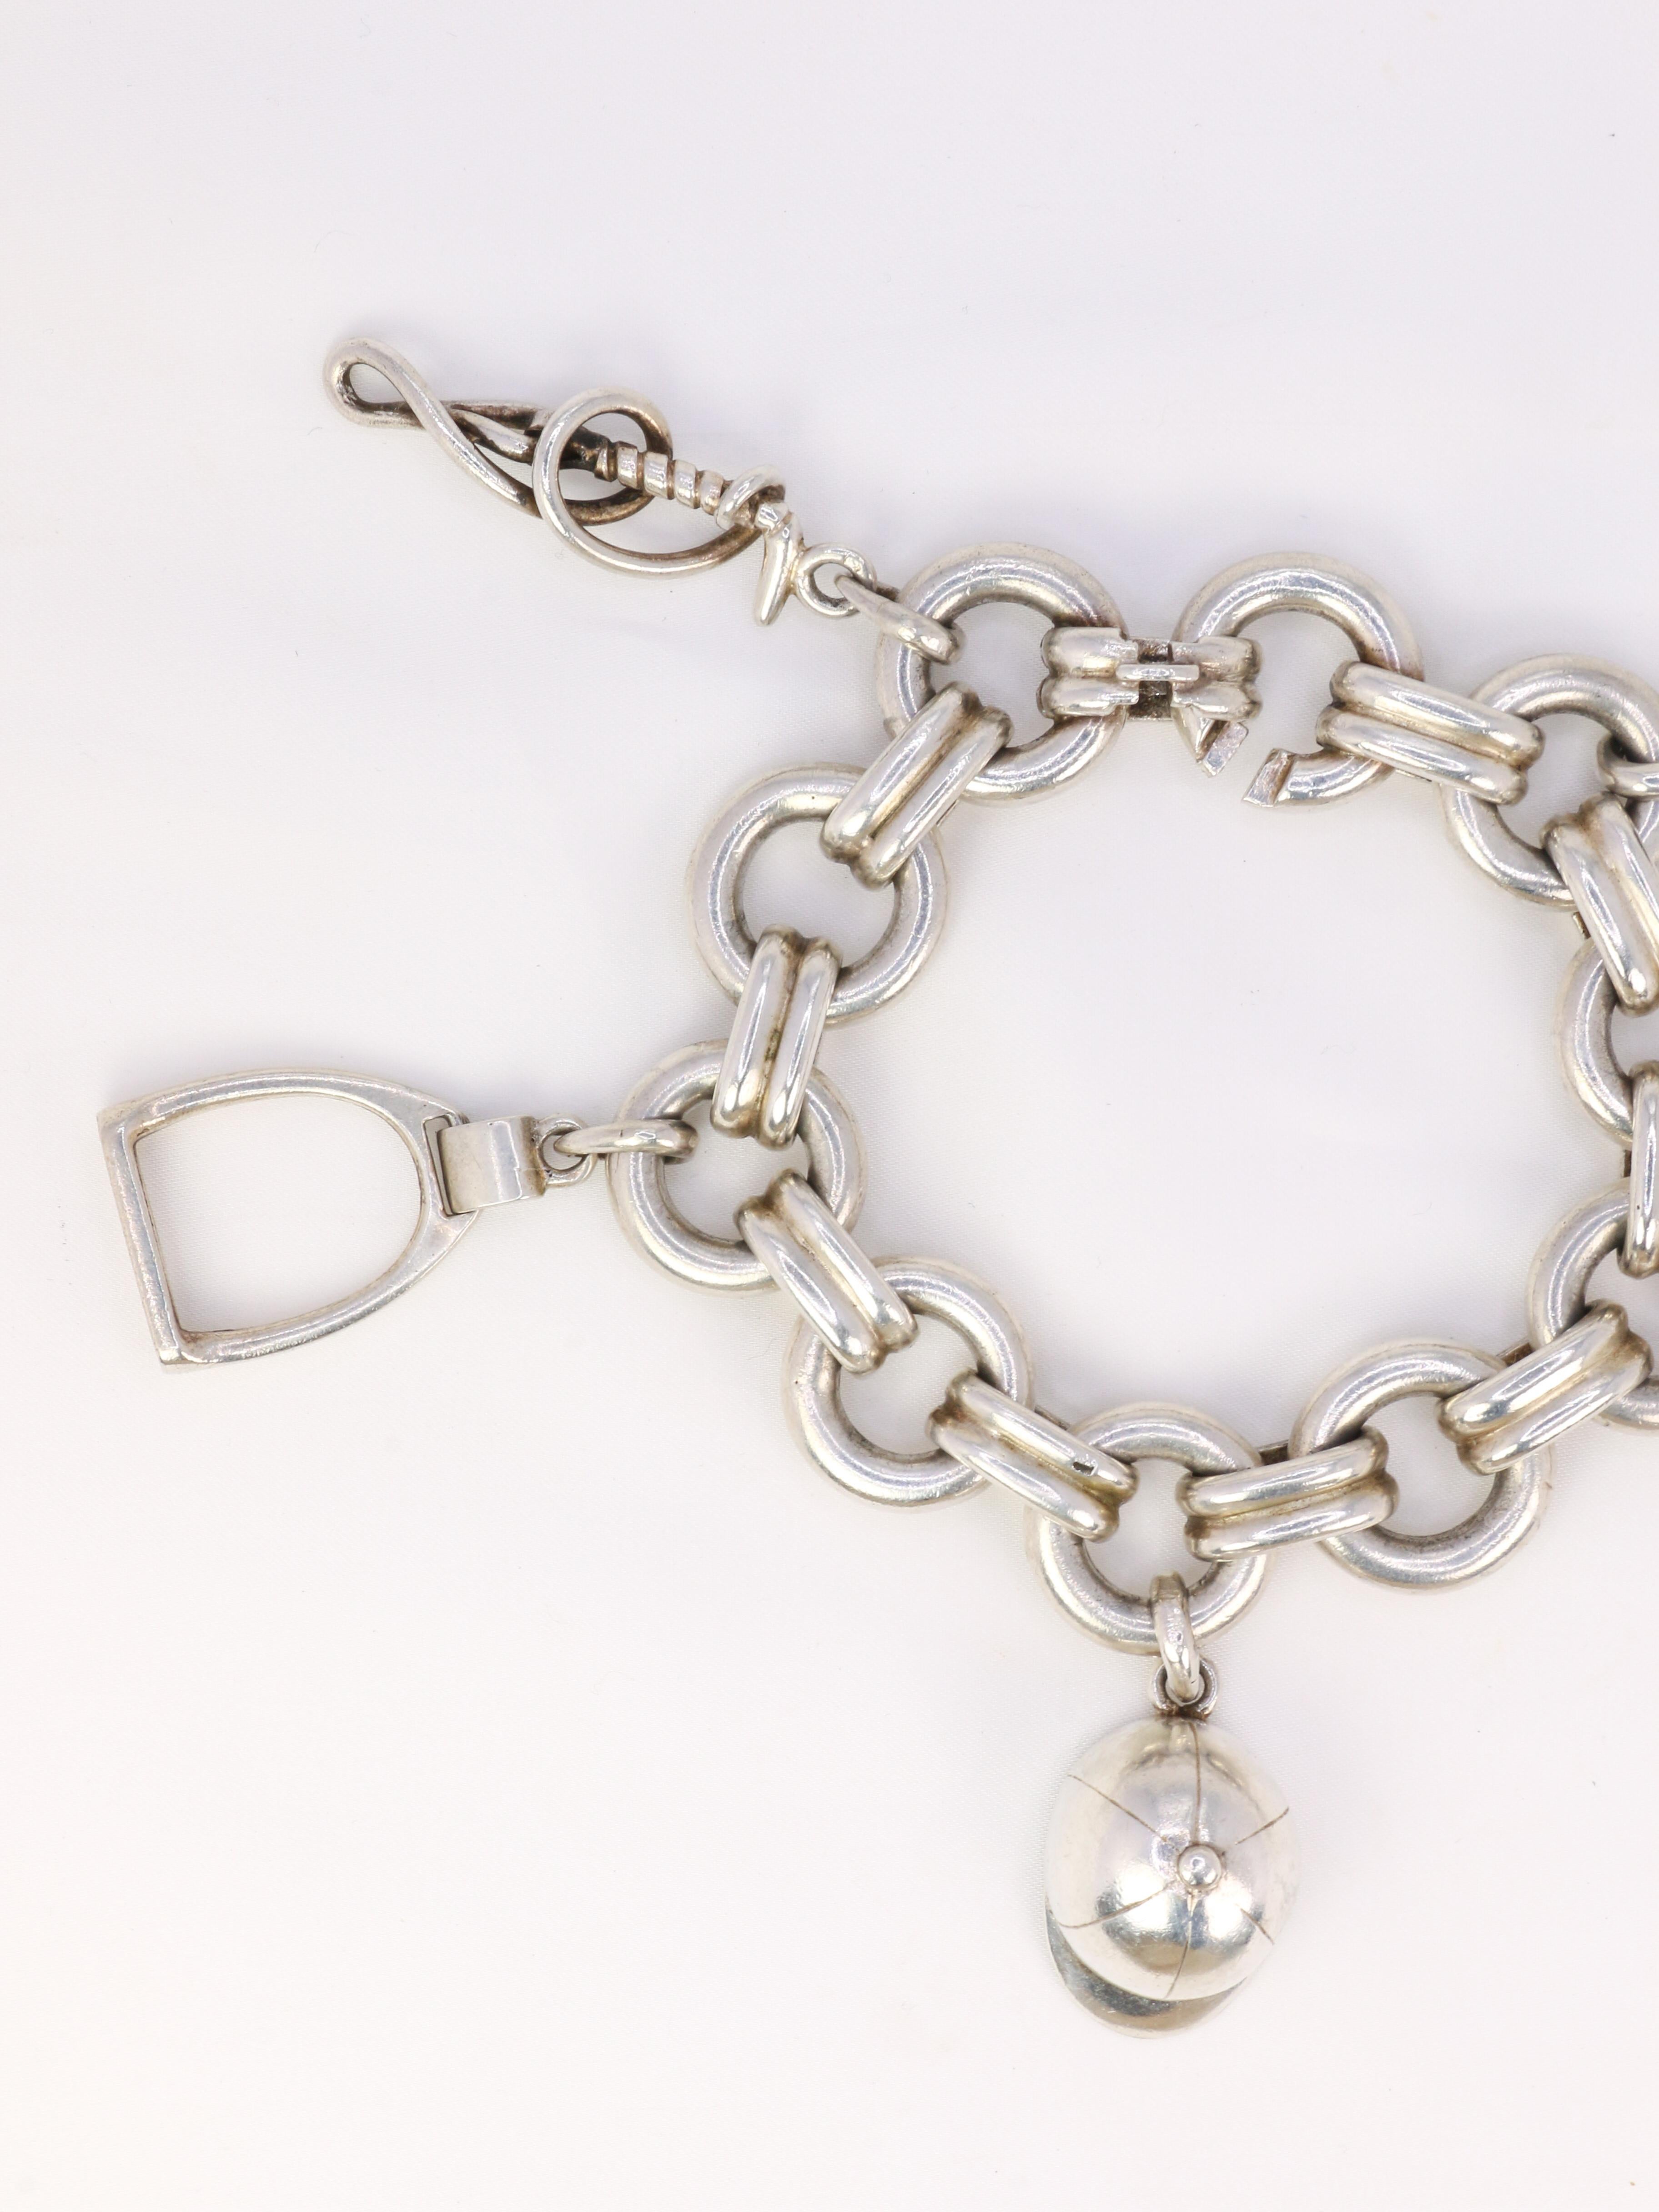 Gaétan de Percin (att. to HERMES) Silver bracelet and equestrian charms  In Good Condition For Sale In PARIS, FR